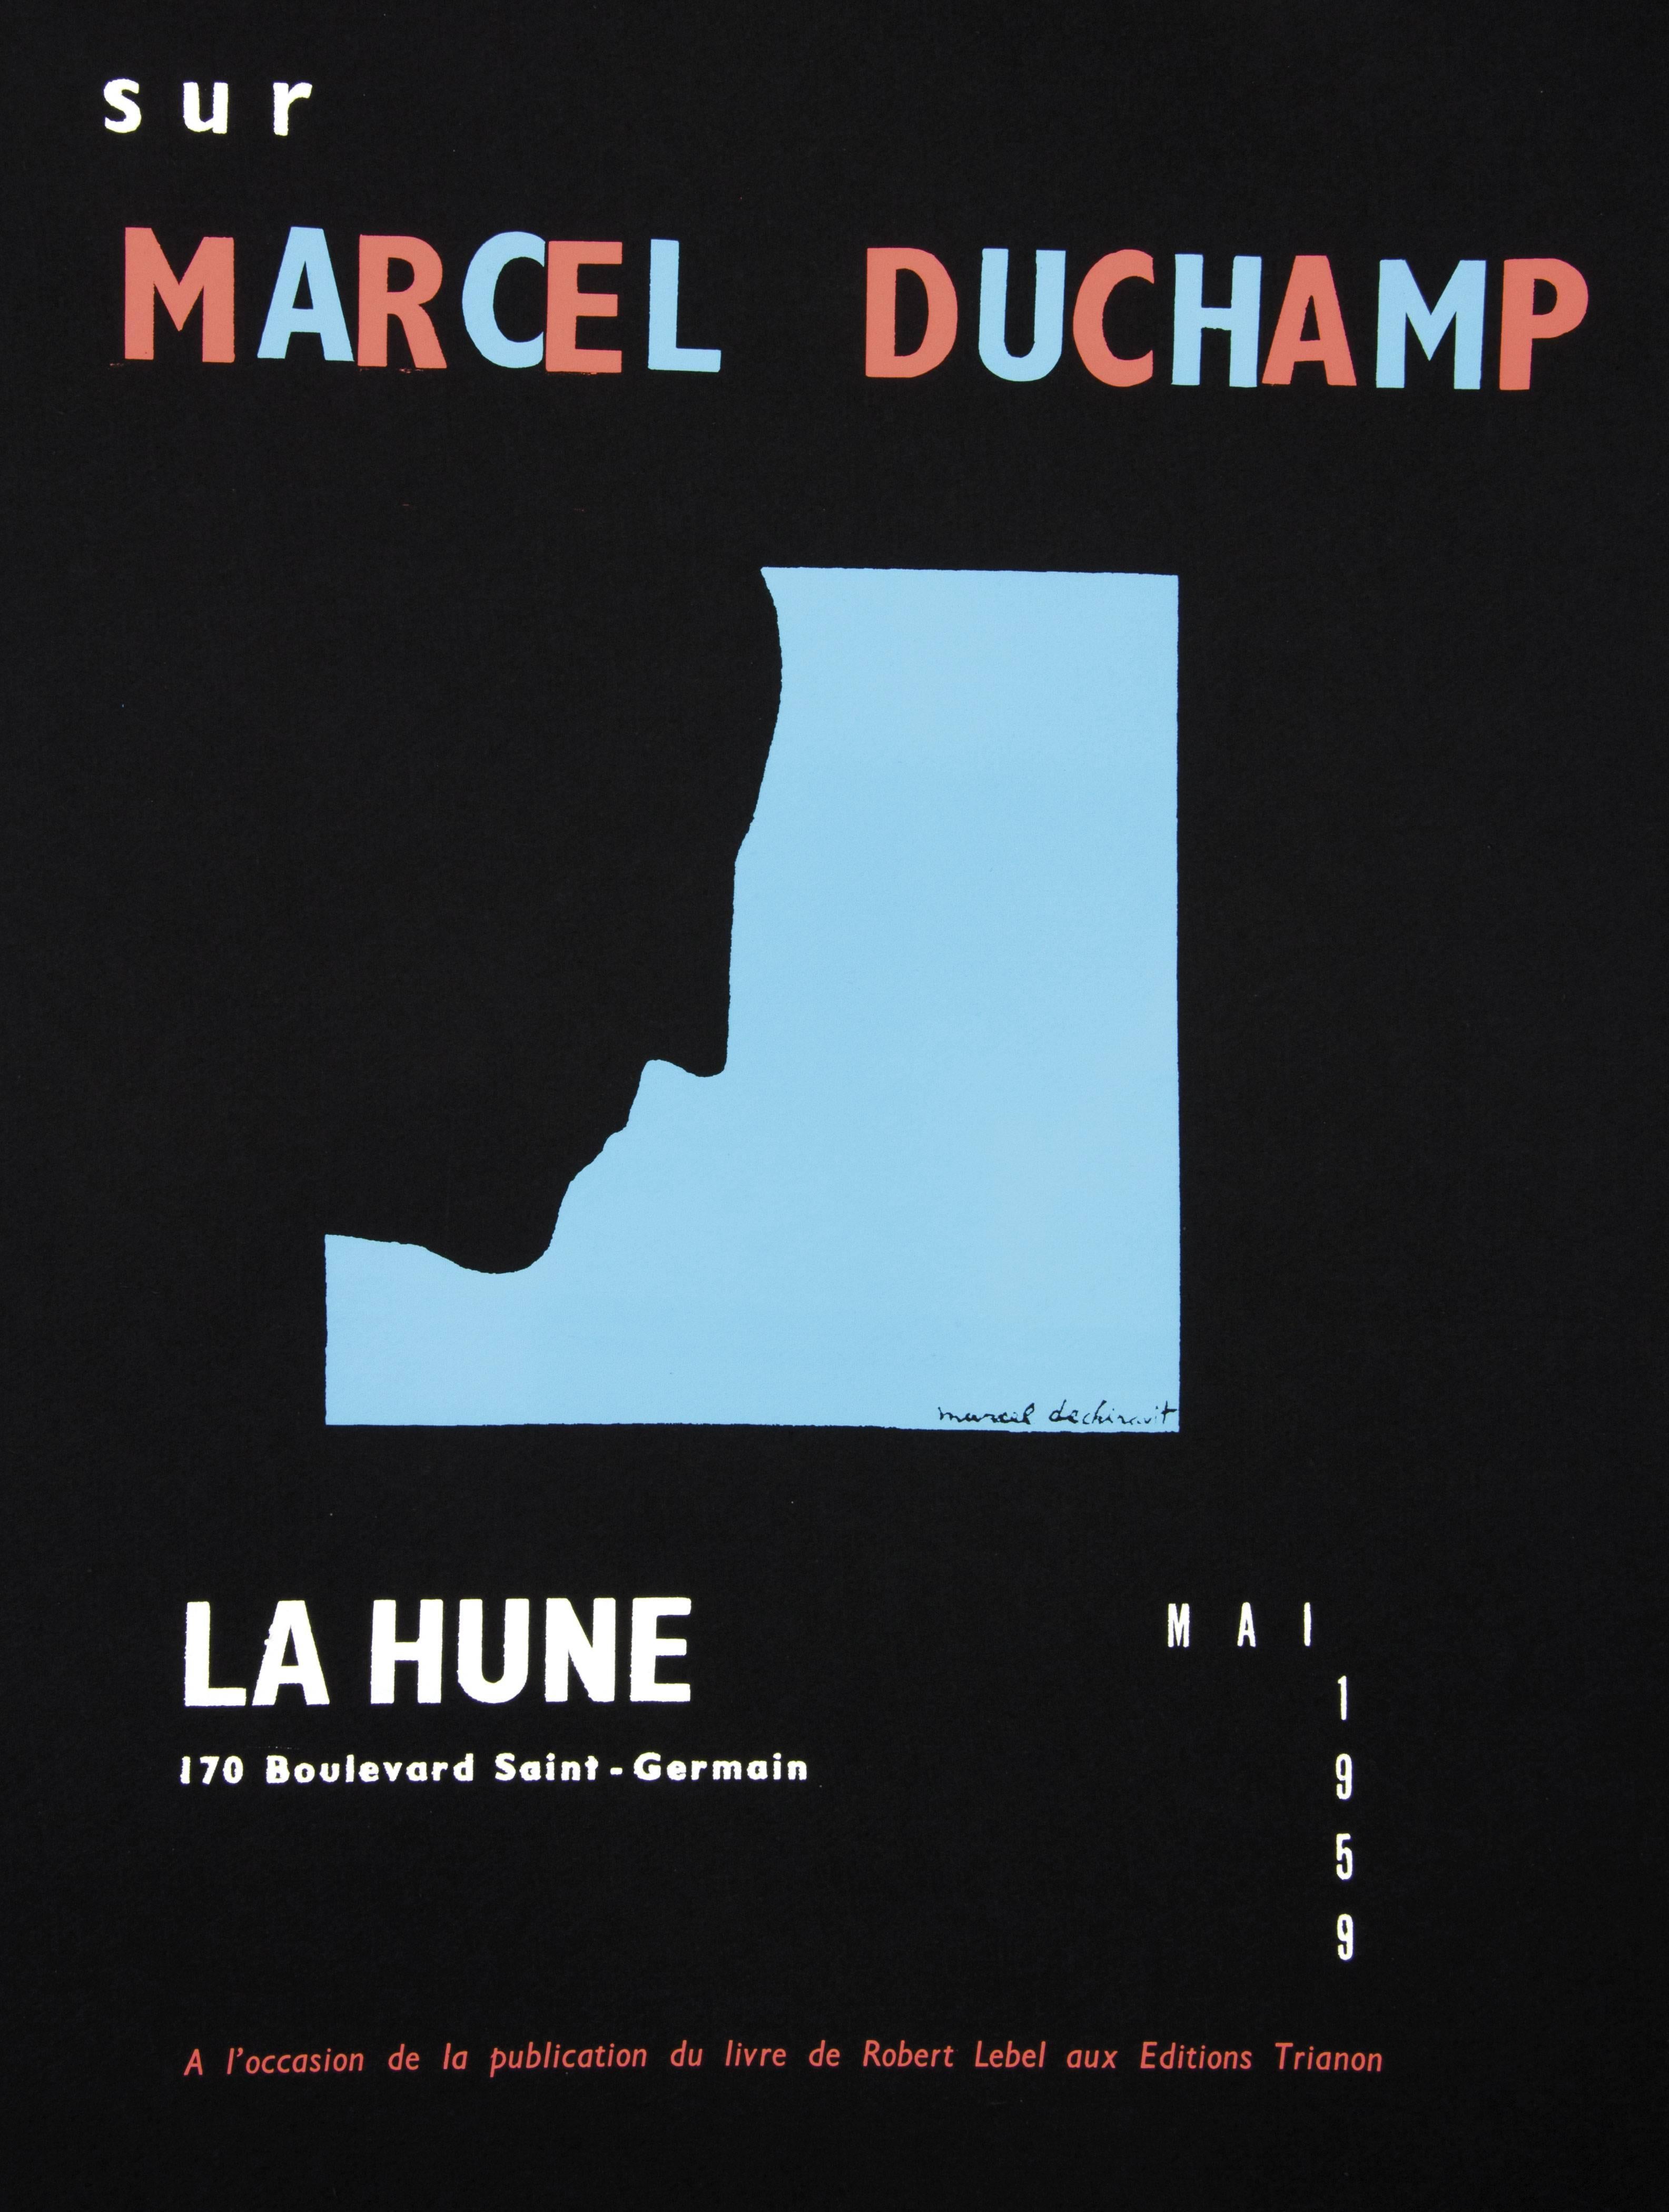 Marcel Duchamp Portrait Print - DUCHAMP. Five Original Duchamp Screen-Print Posters: Self Portrait in Profile